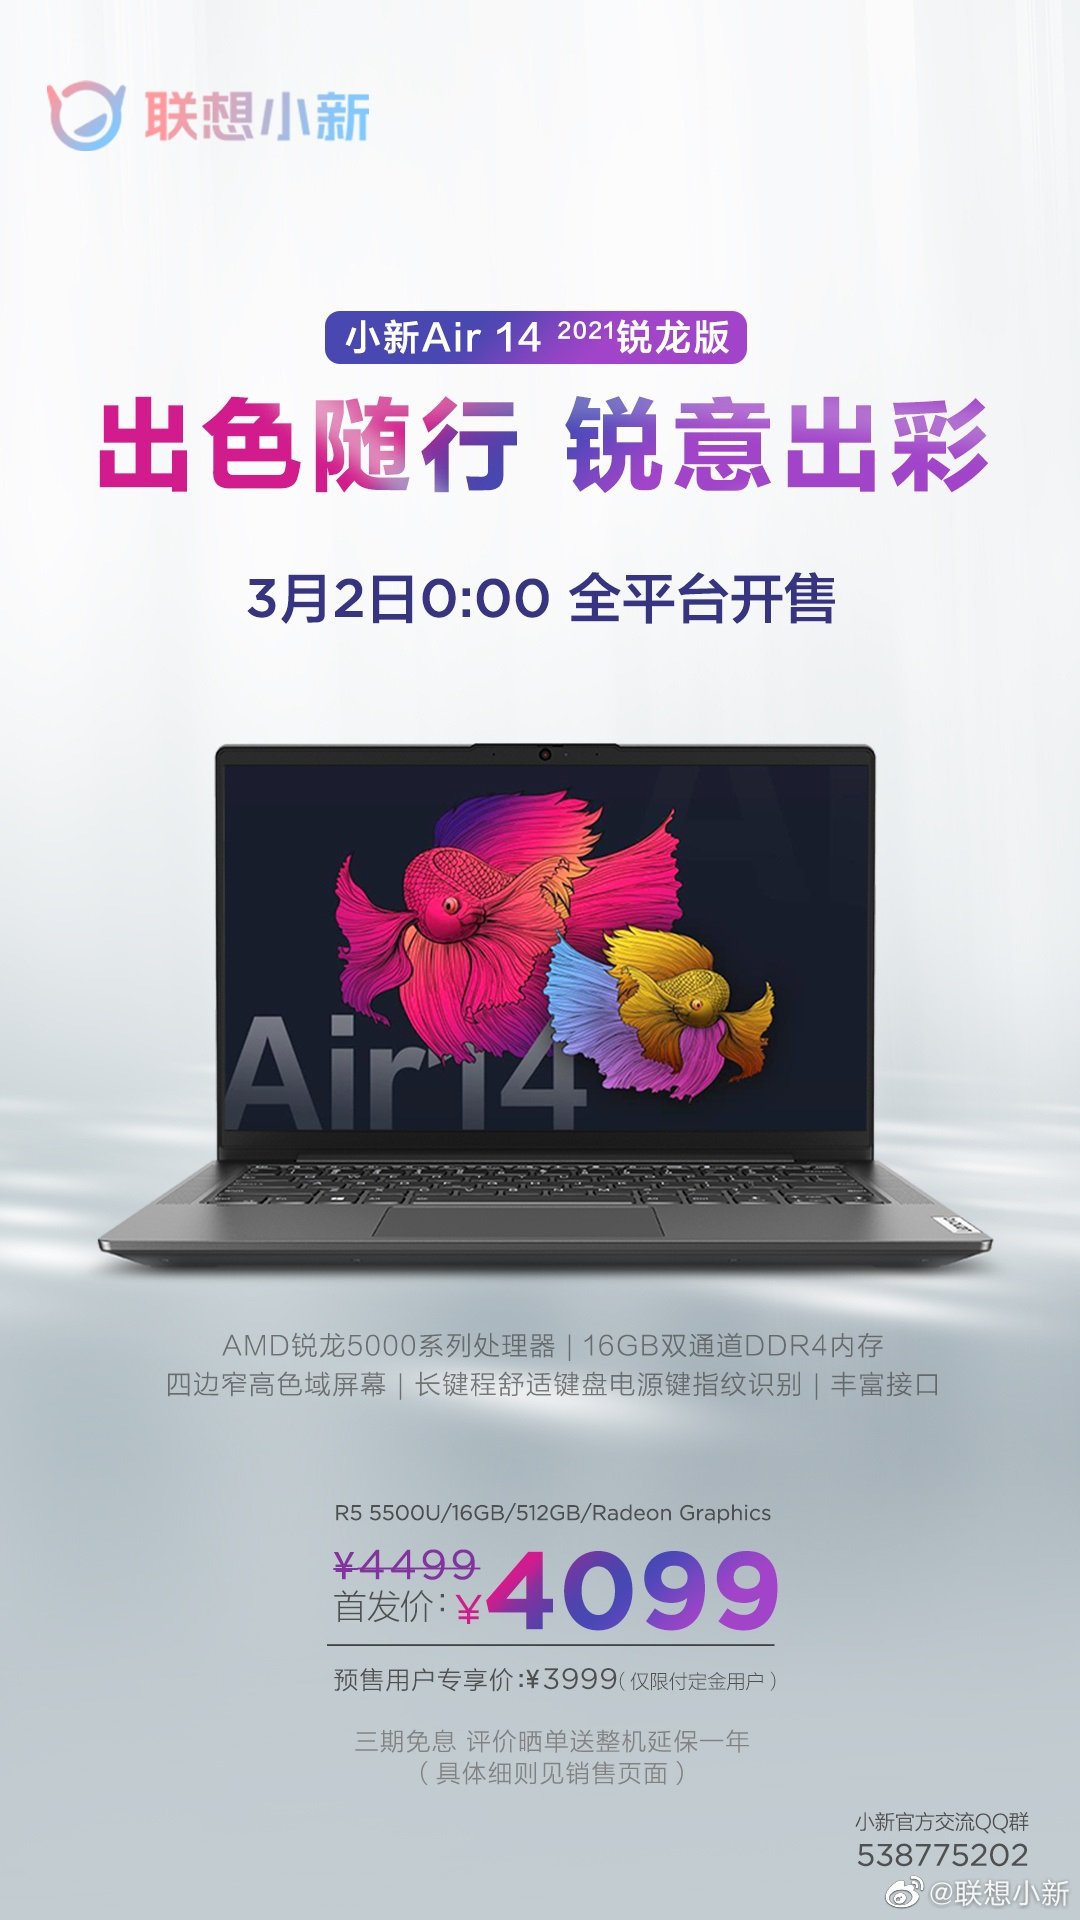 Lenovo Xiaoxin Air 14 2021 Ryzen Edition Sale China